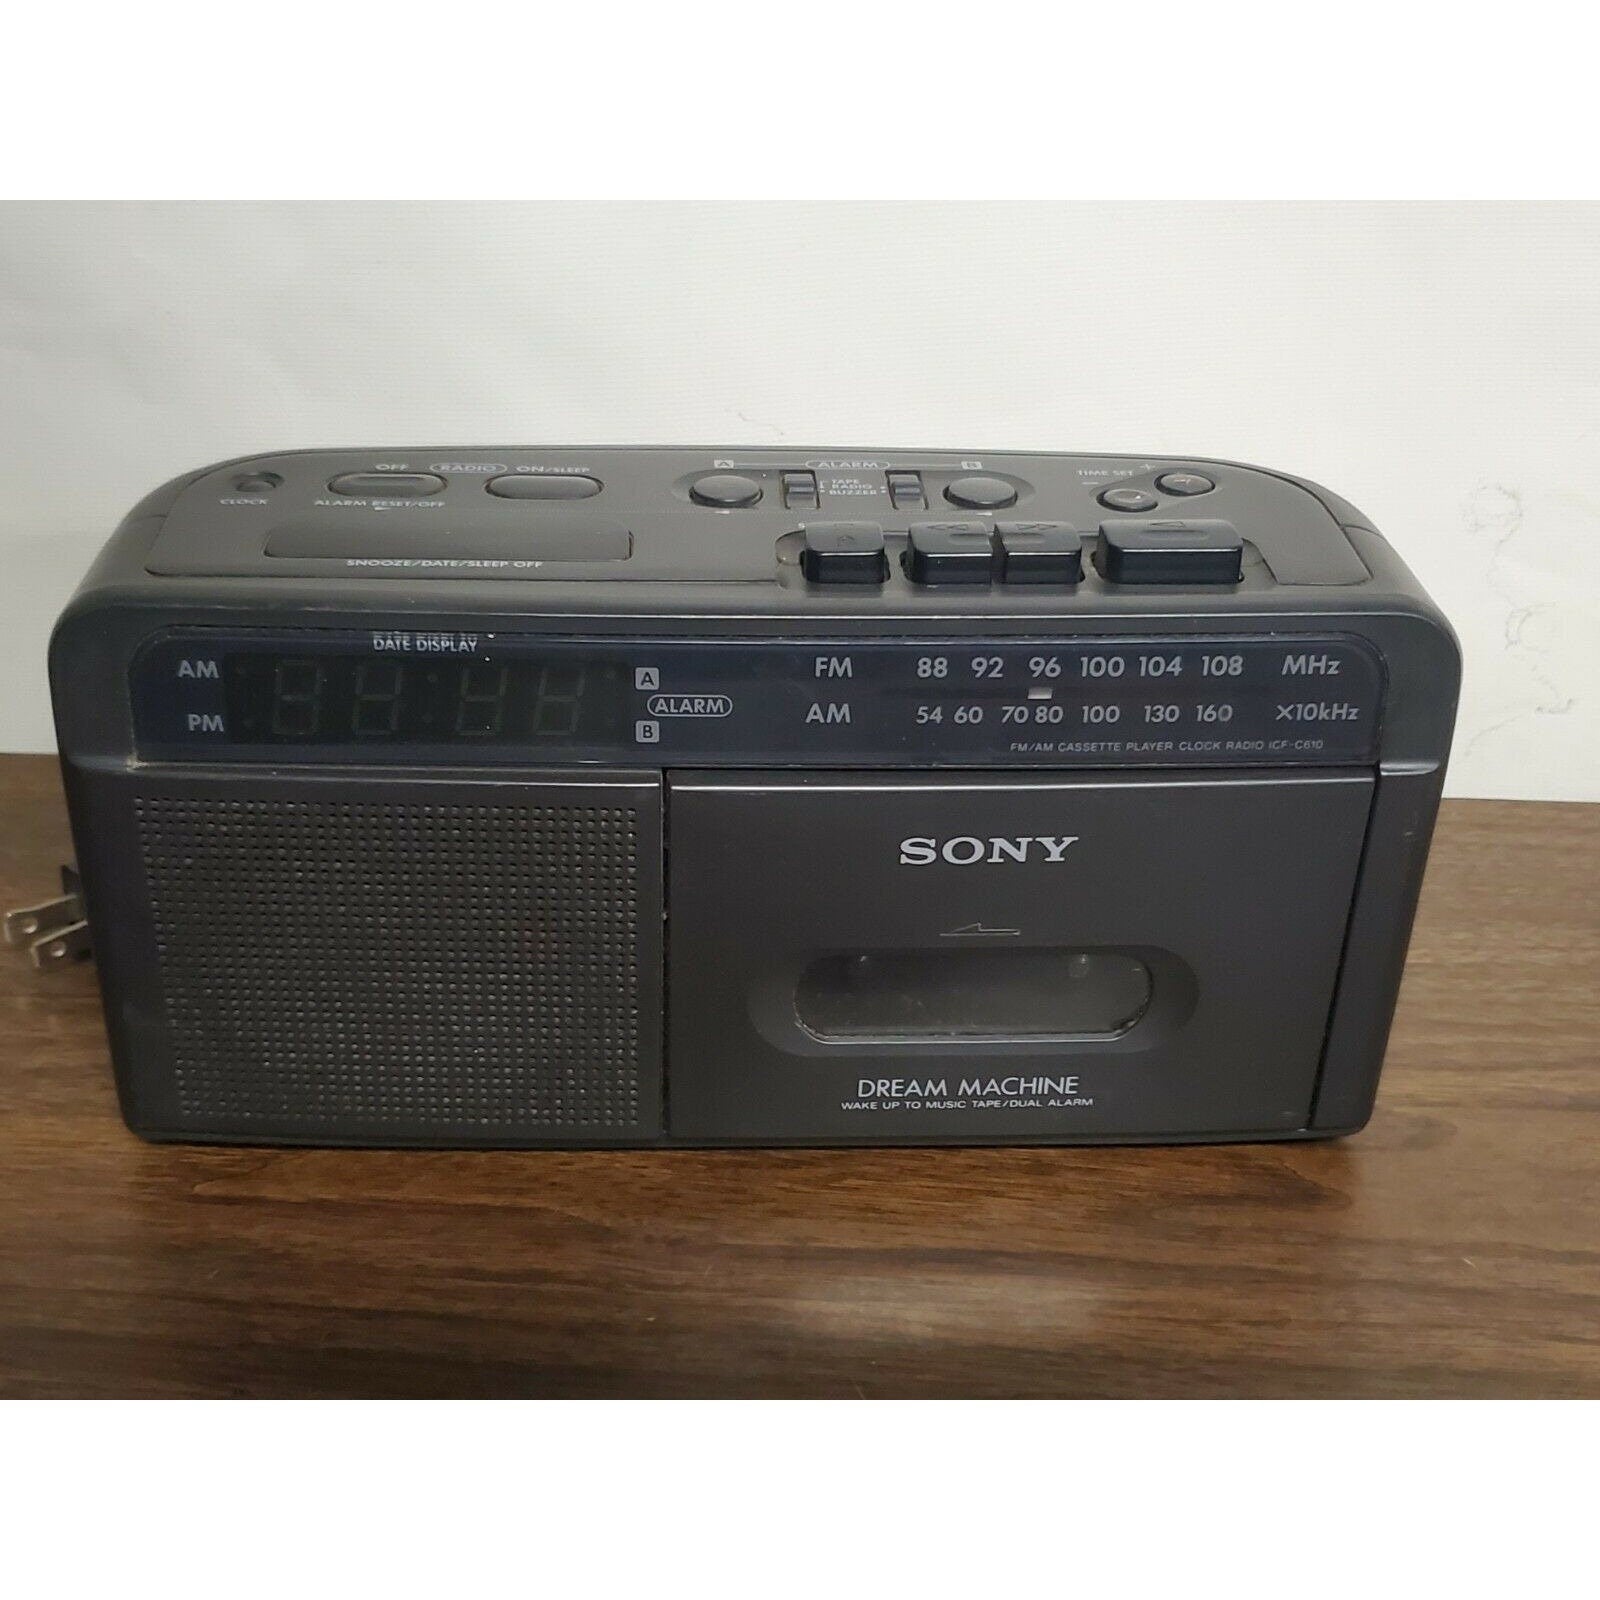 Sony Dream Machine Alarm Clock ICF-C610 AM/FM Radio Cassette Player.